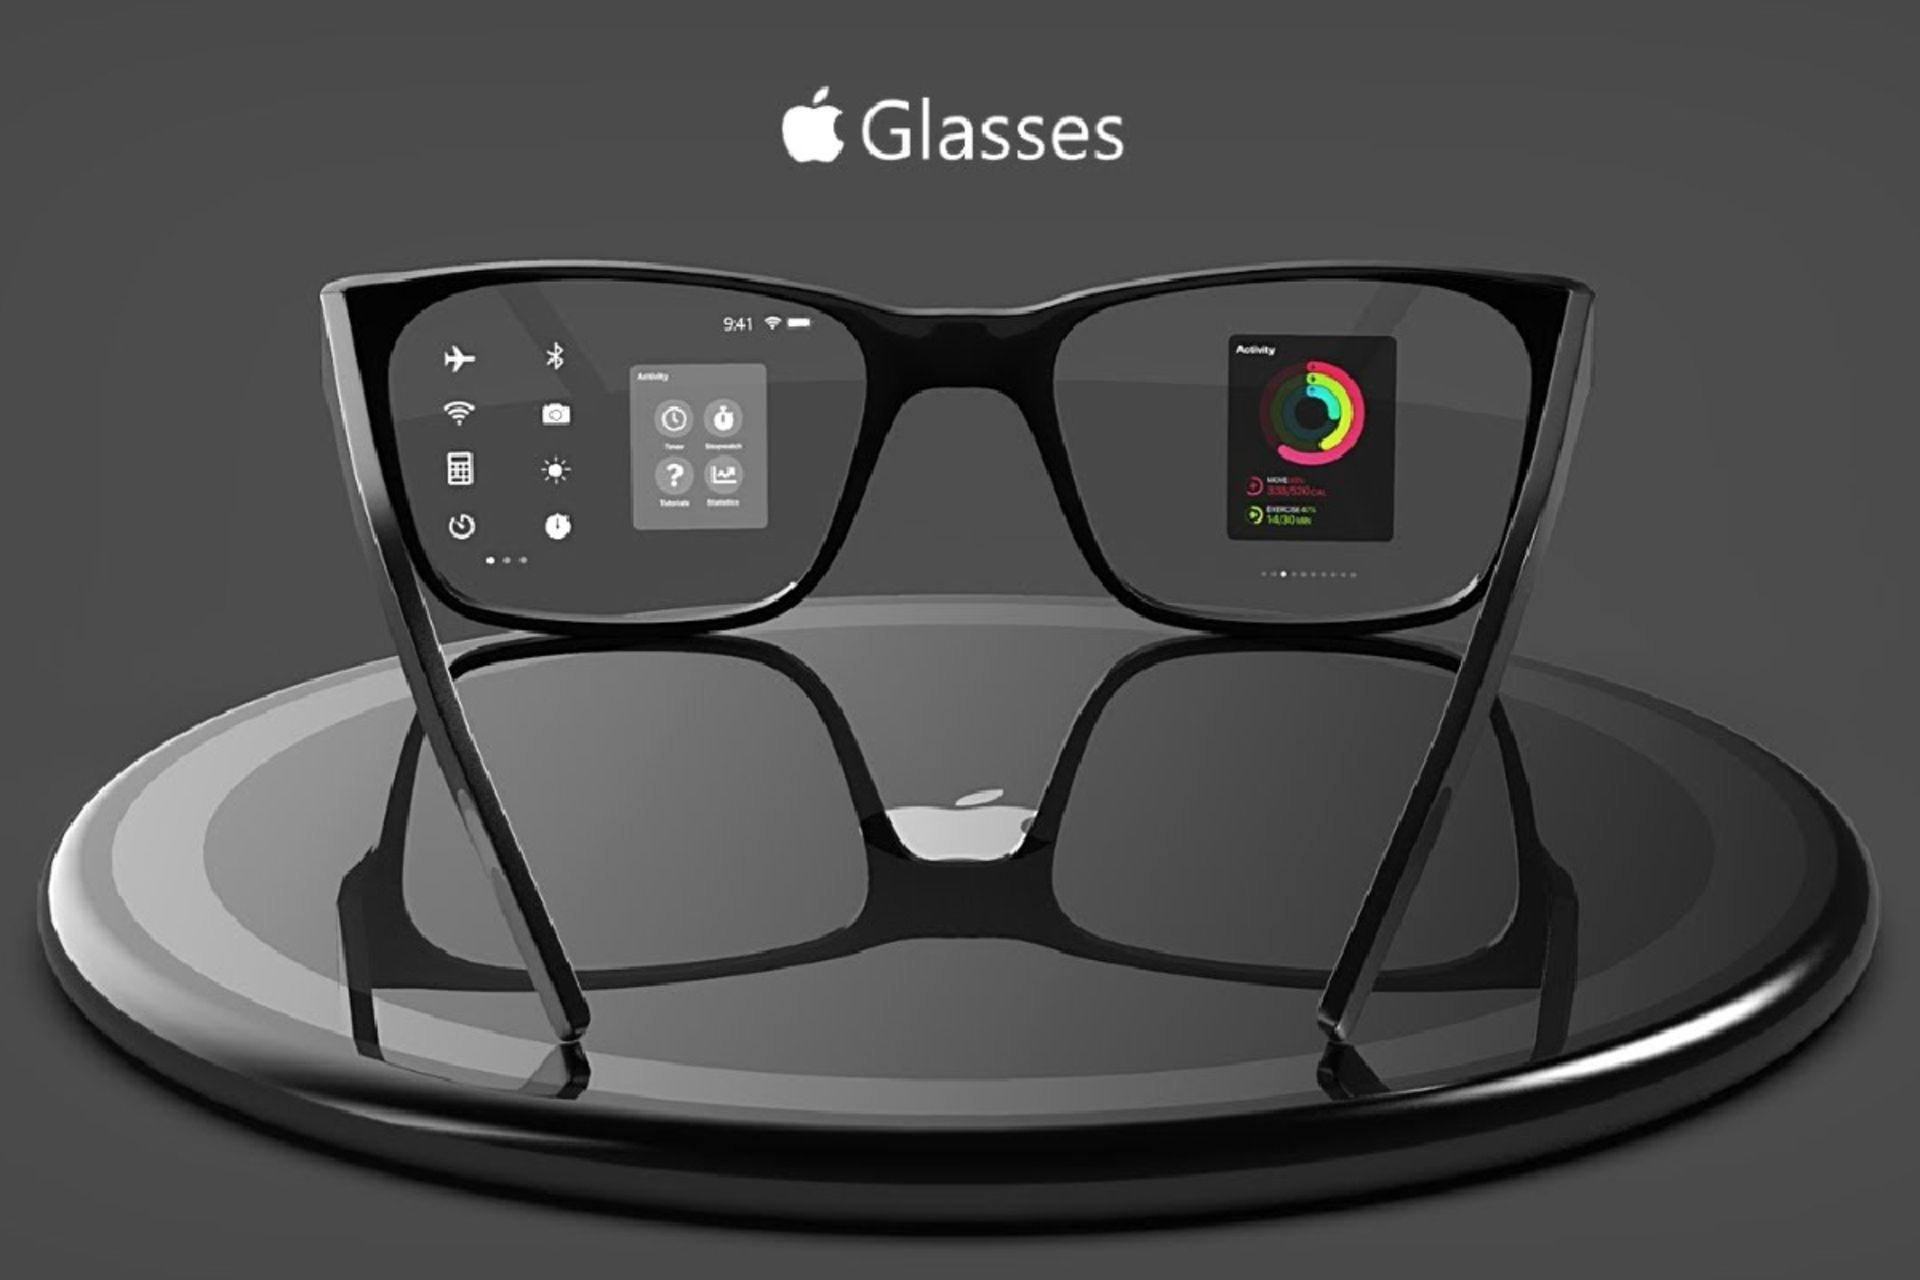 مرجع متخصصين ايران تصوير مفهومي از عينك واقعيت افزوده اپل / Apple Glass